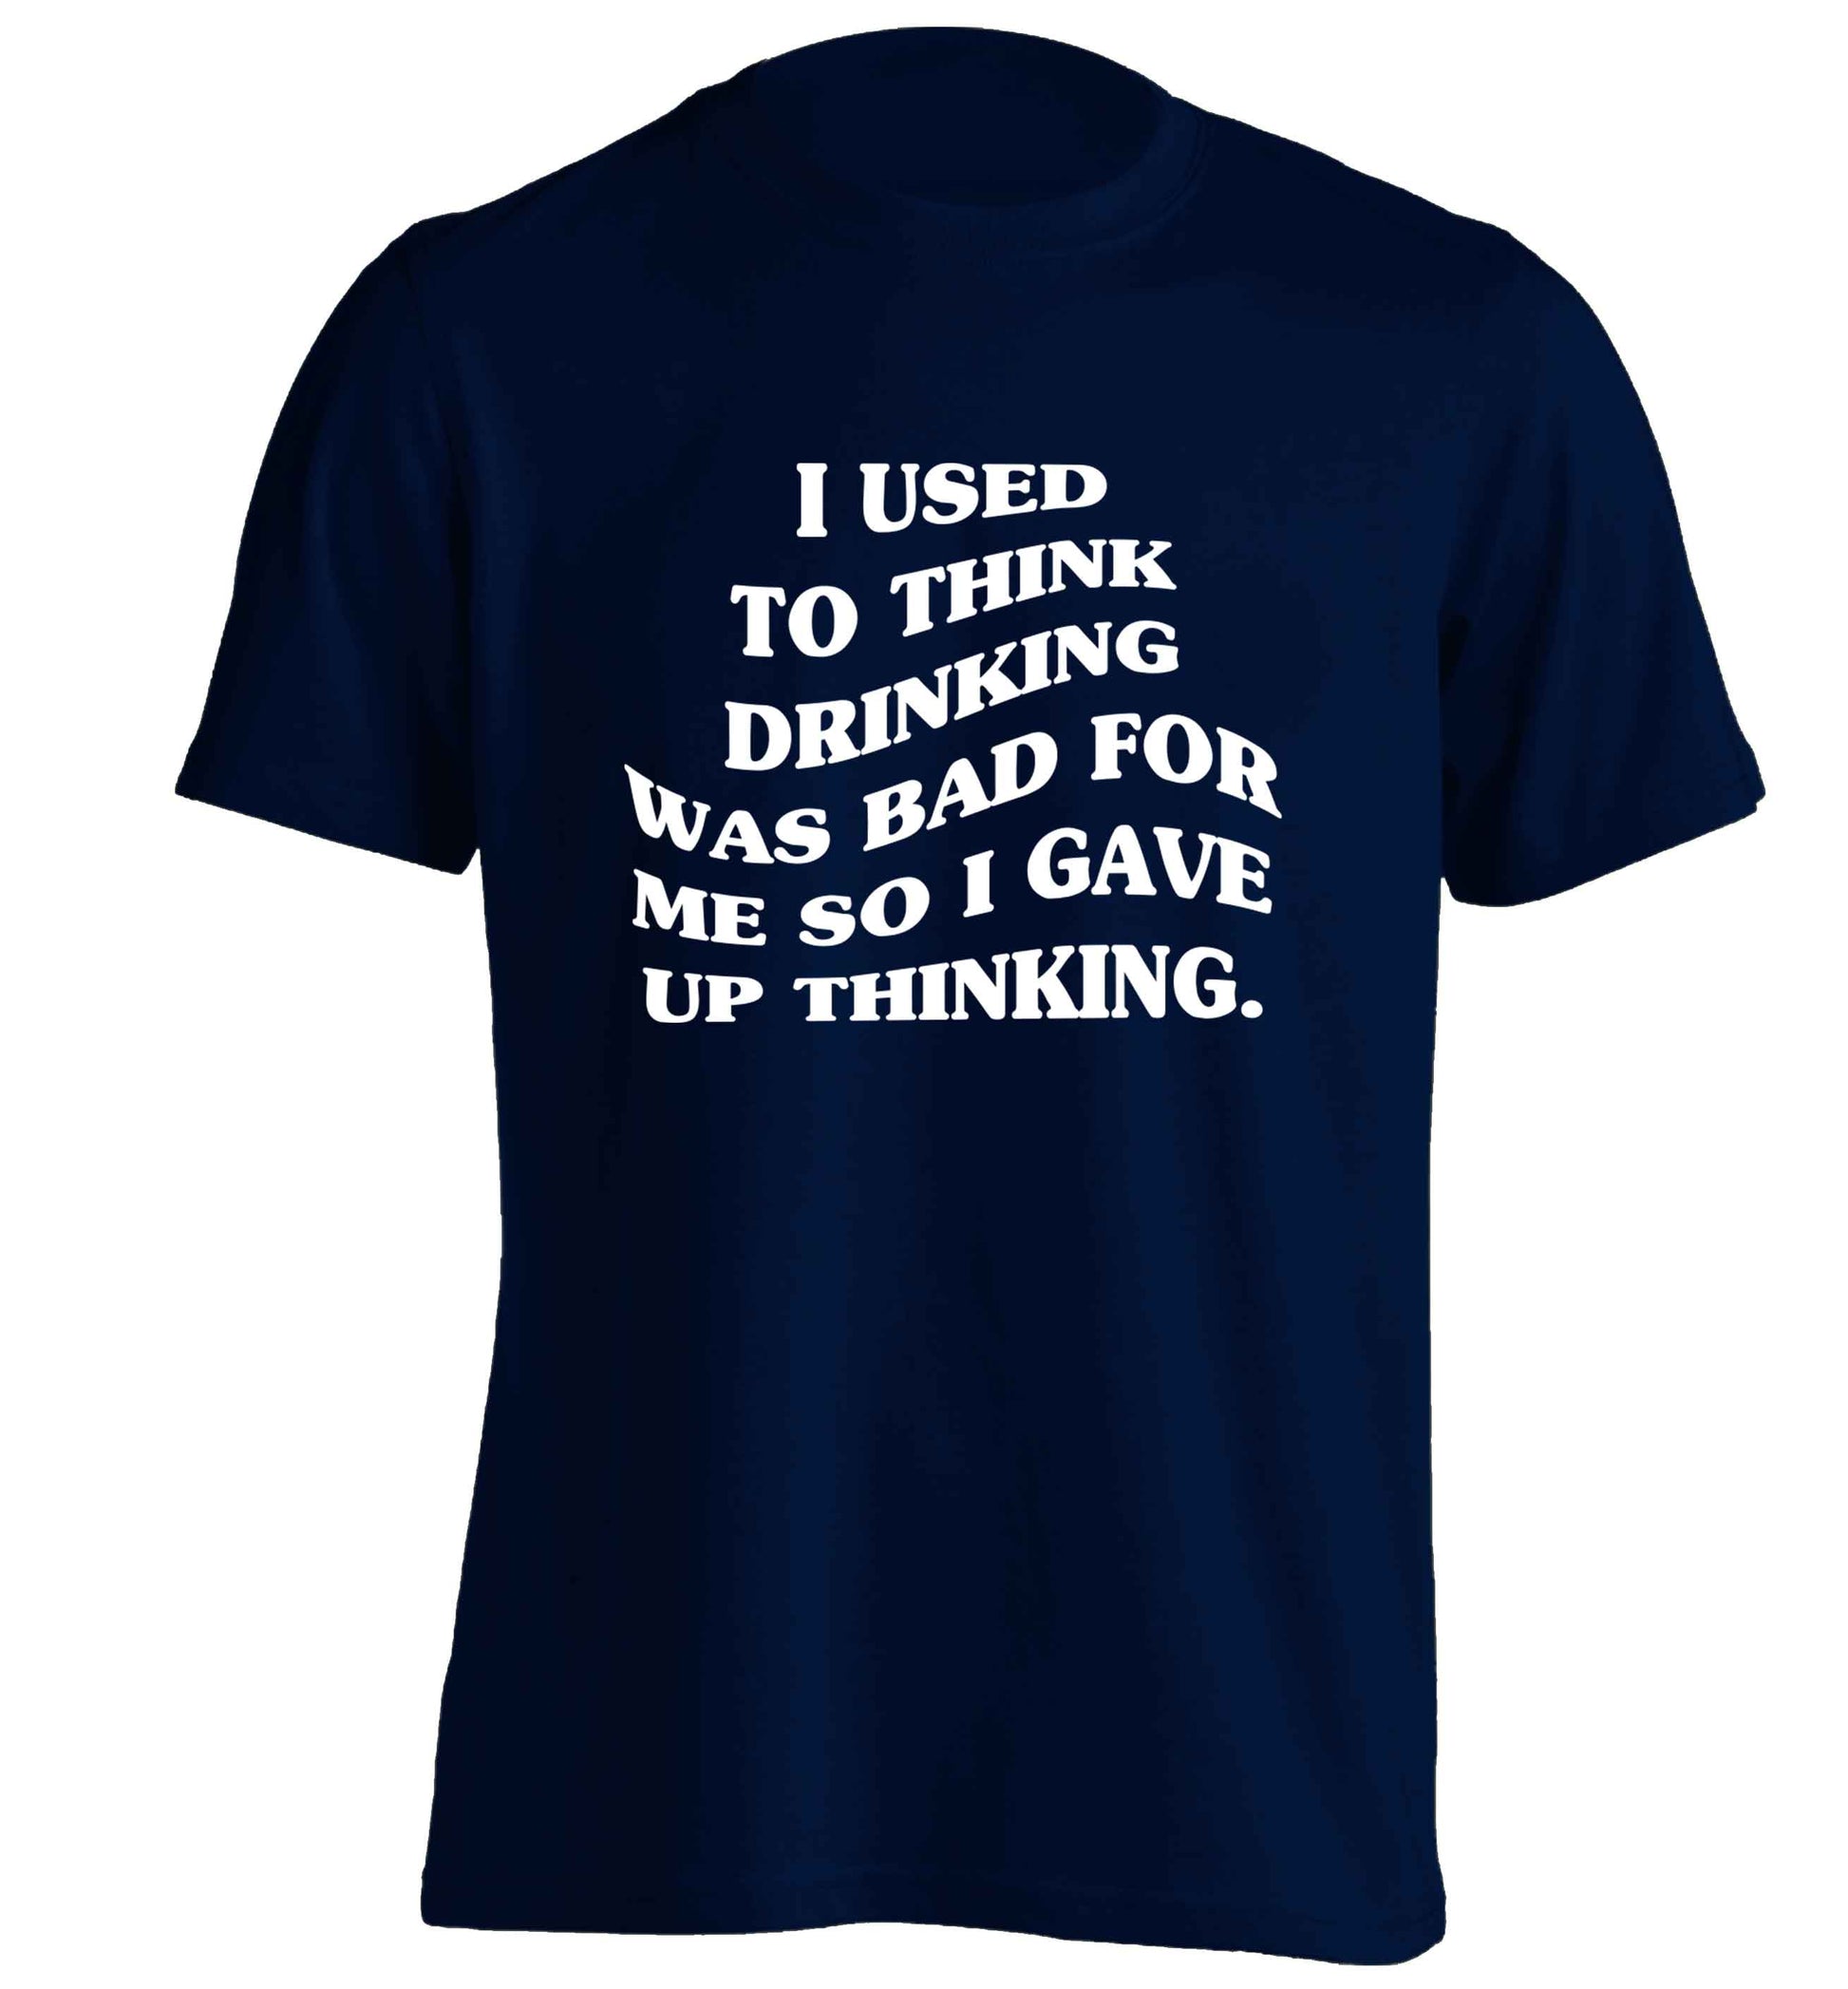 I used to think drinking was bad so I gave up thinking adults unisex navy Tshirt 2XL